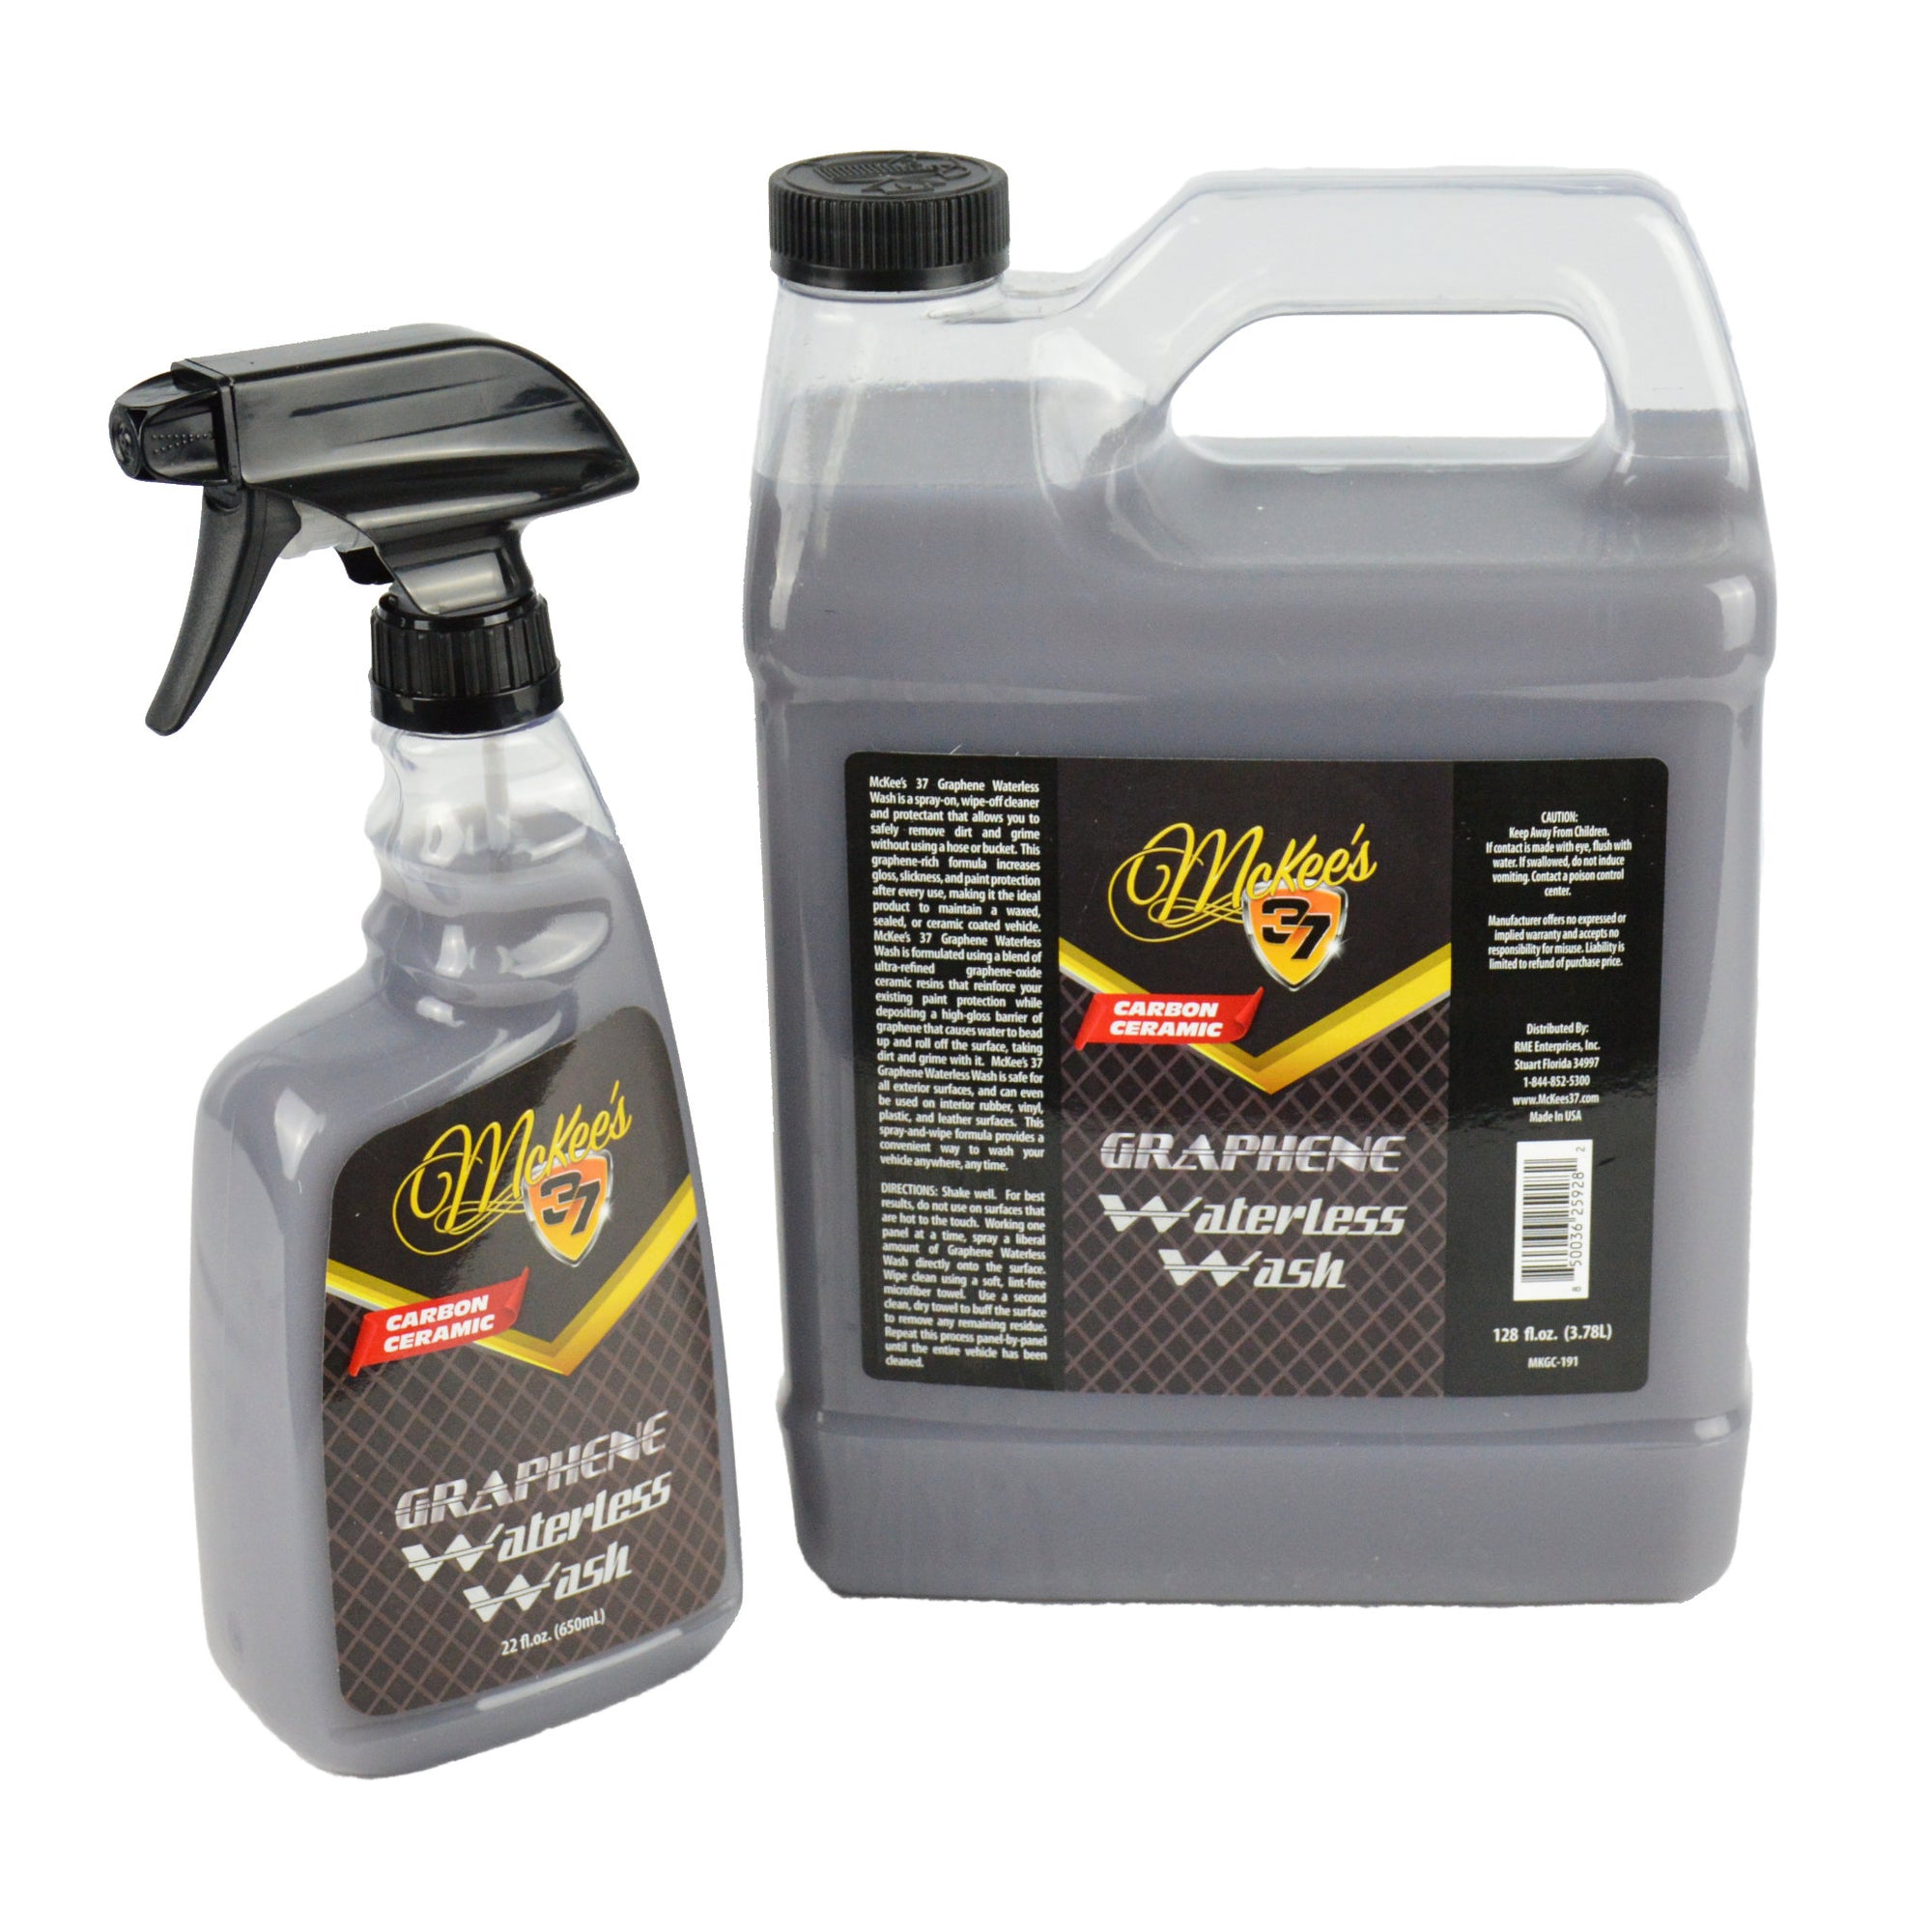 Turtle Wax Hybrid Solutions Bundle Ceramic Wax Spray Coating + 3 in 1  Detail Spray Waterless Wash